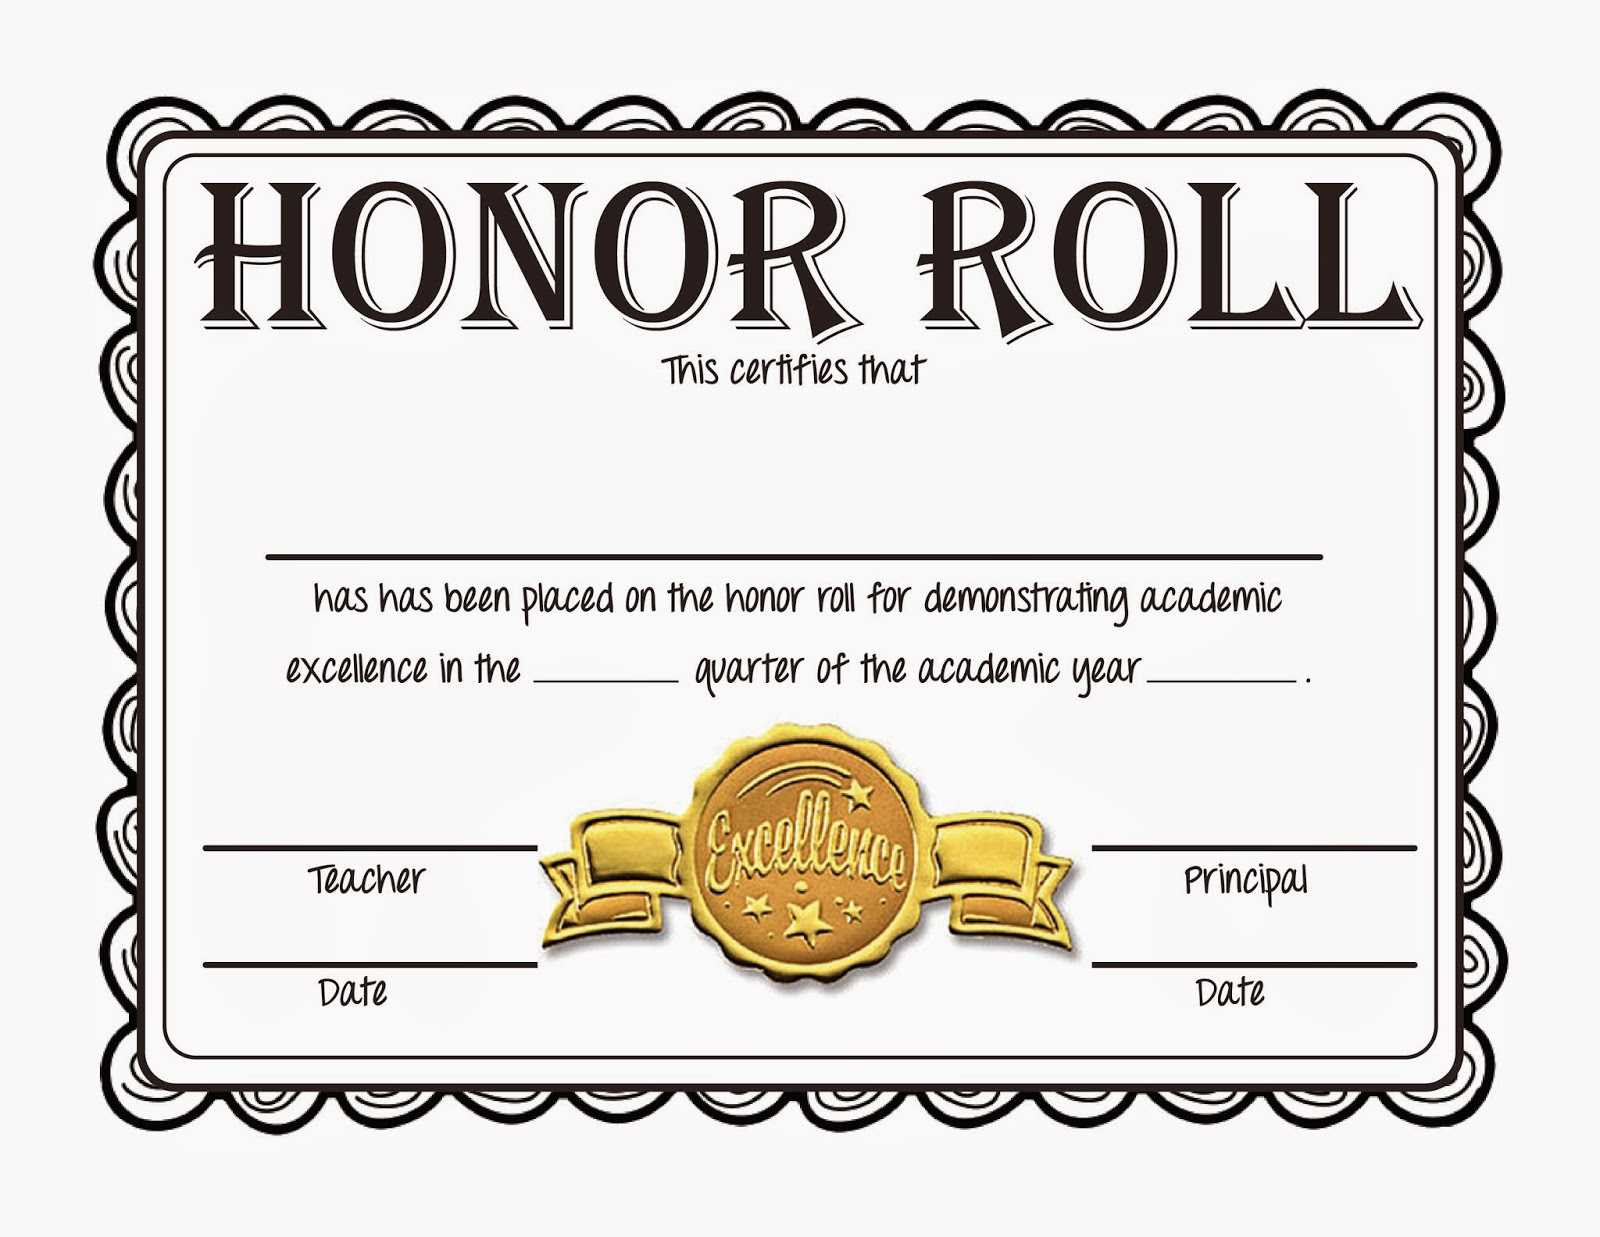 Honor Roll Certificates Template Regarding Honor Roll Certificate Template